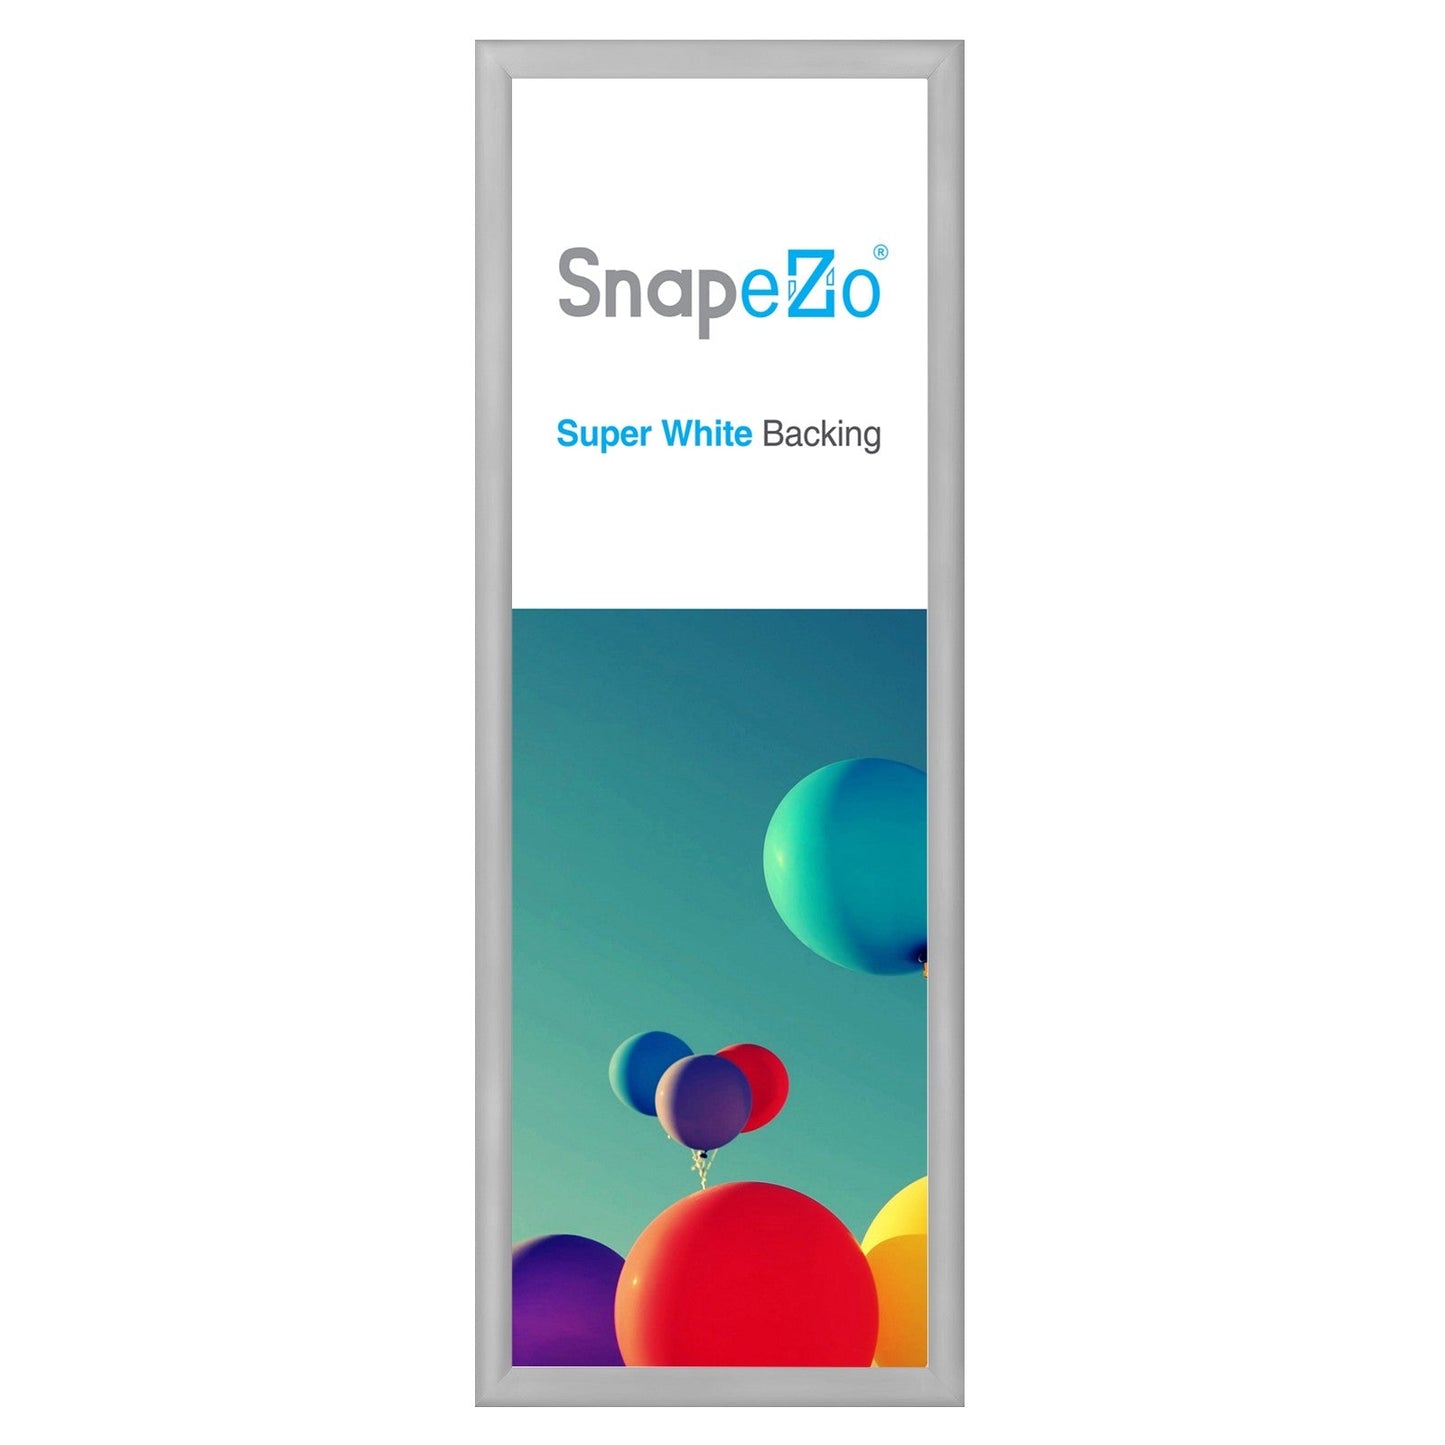 13x39 Silver SnapeZo® Snap Frame - 1.2" Profile